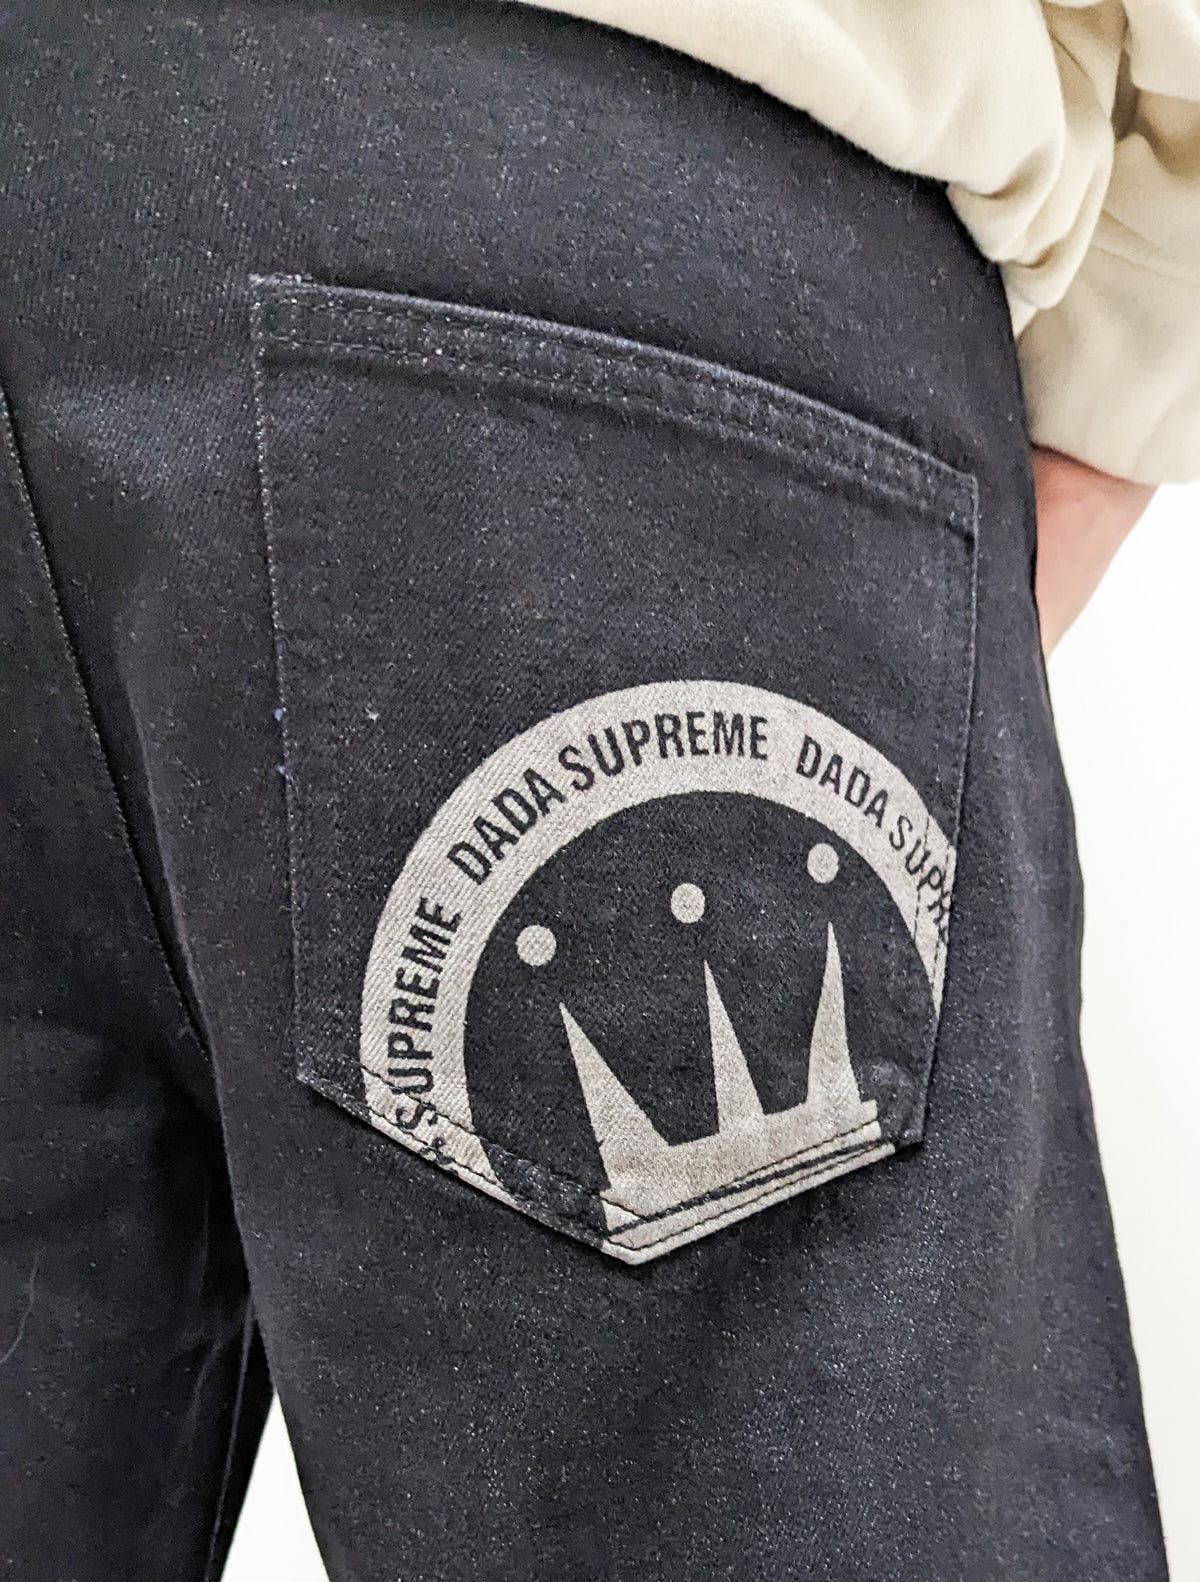 Dada Supreme Coin Crown Loose Fit Jeans Shorts Black - Soulsideshop